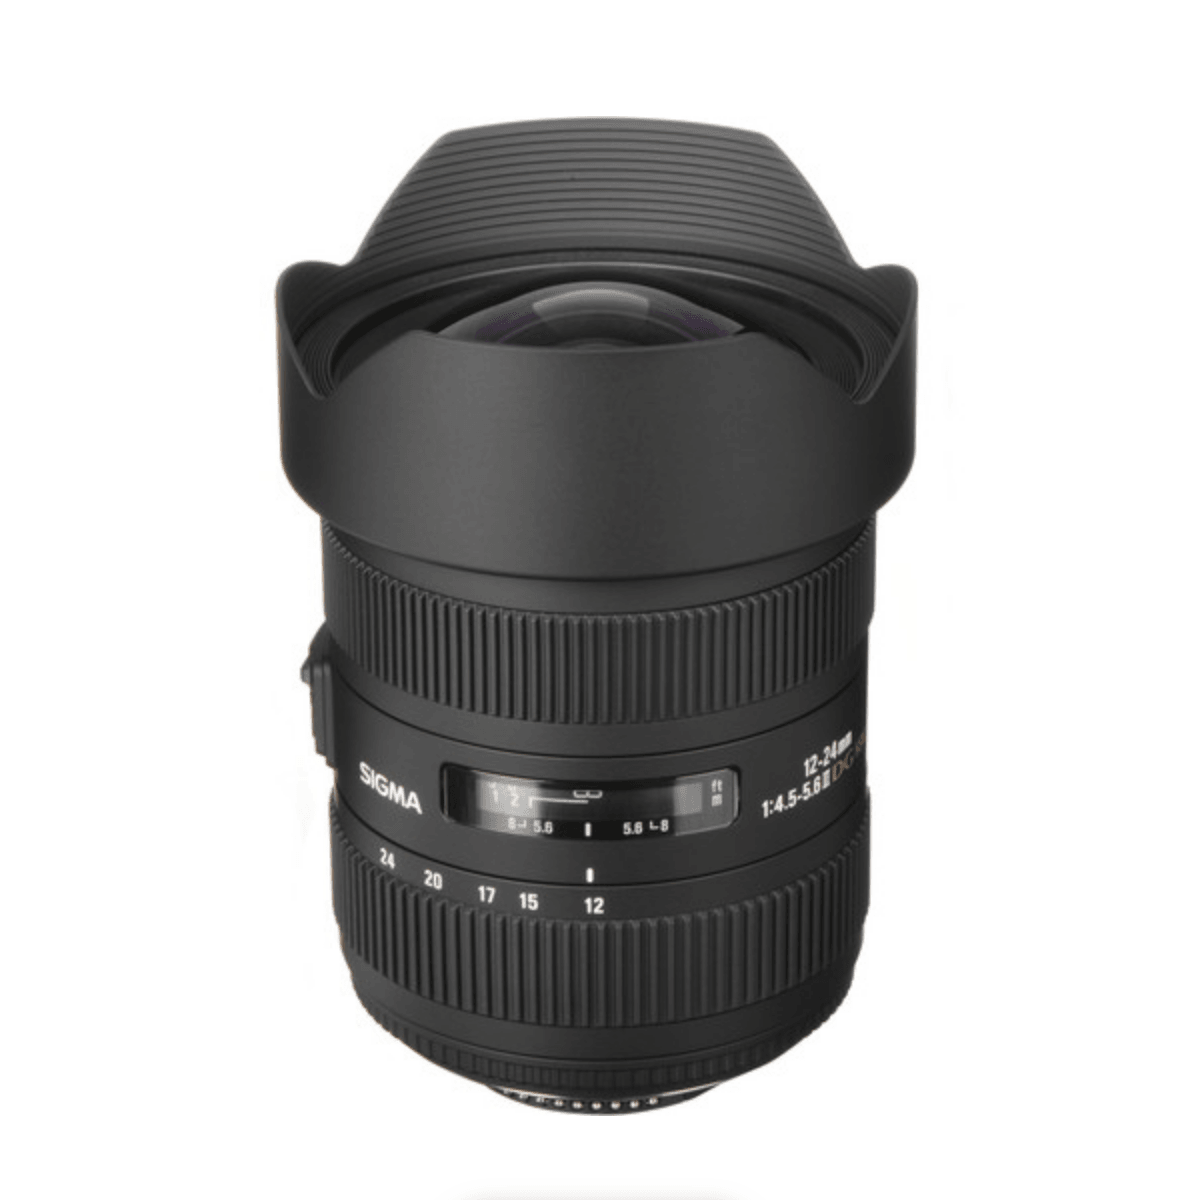 Sigma 12-24mm F4.5-5.6 EX DG ASP HSM II Wide-Angle Zoom Lens (For Nikon)